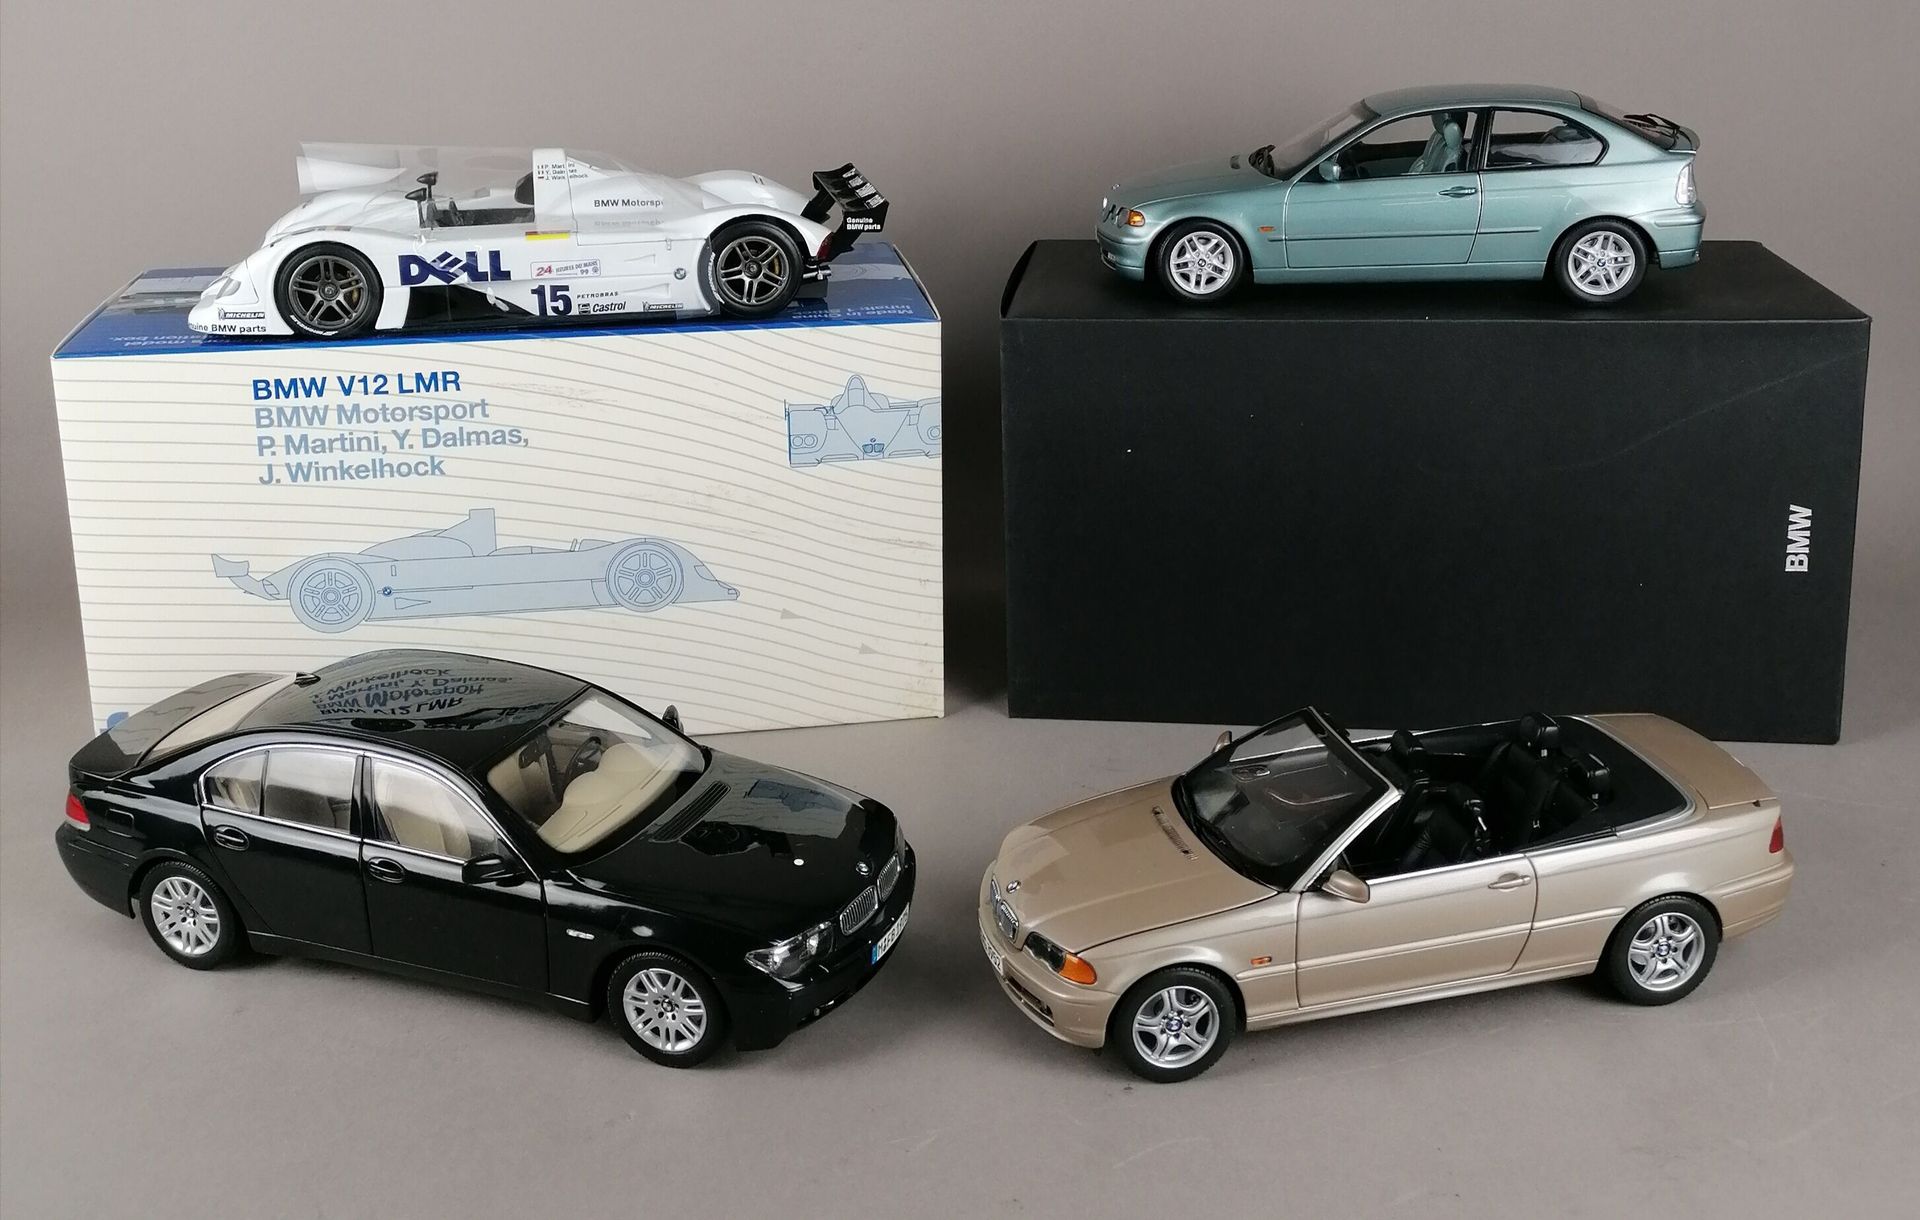 Null BMW - VIER BMWs im Maßstab 1:18:

1x V12 LMR

1x 7Serie

1x 325Ti Kompakt

&hellip;